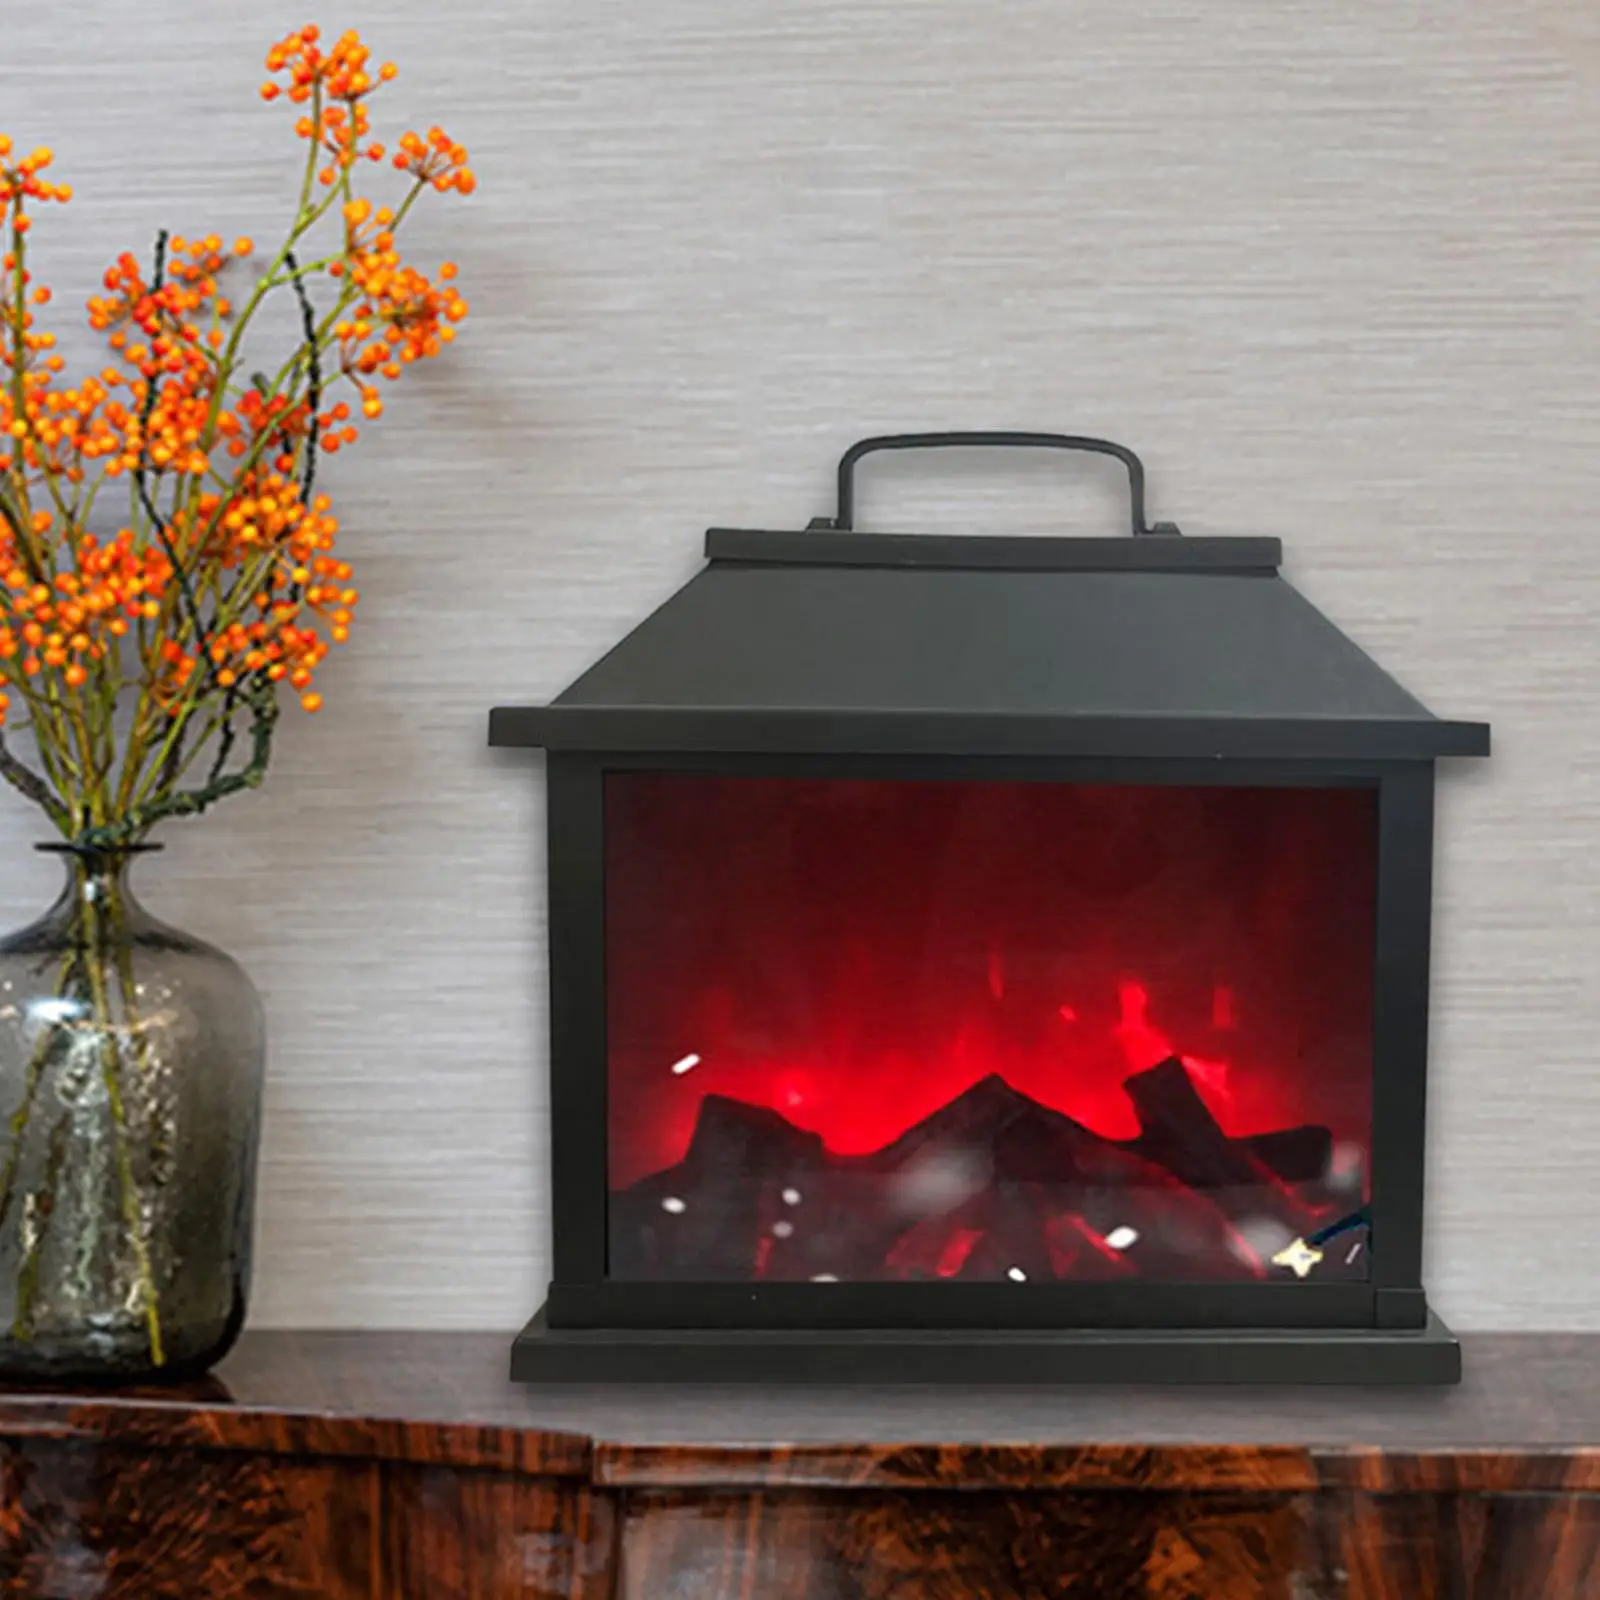 LED Fireplace Lantern Tabletop Lamp /USB Powered Home Decor